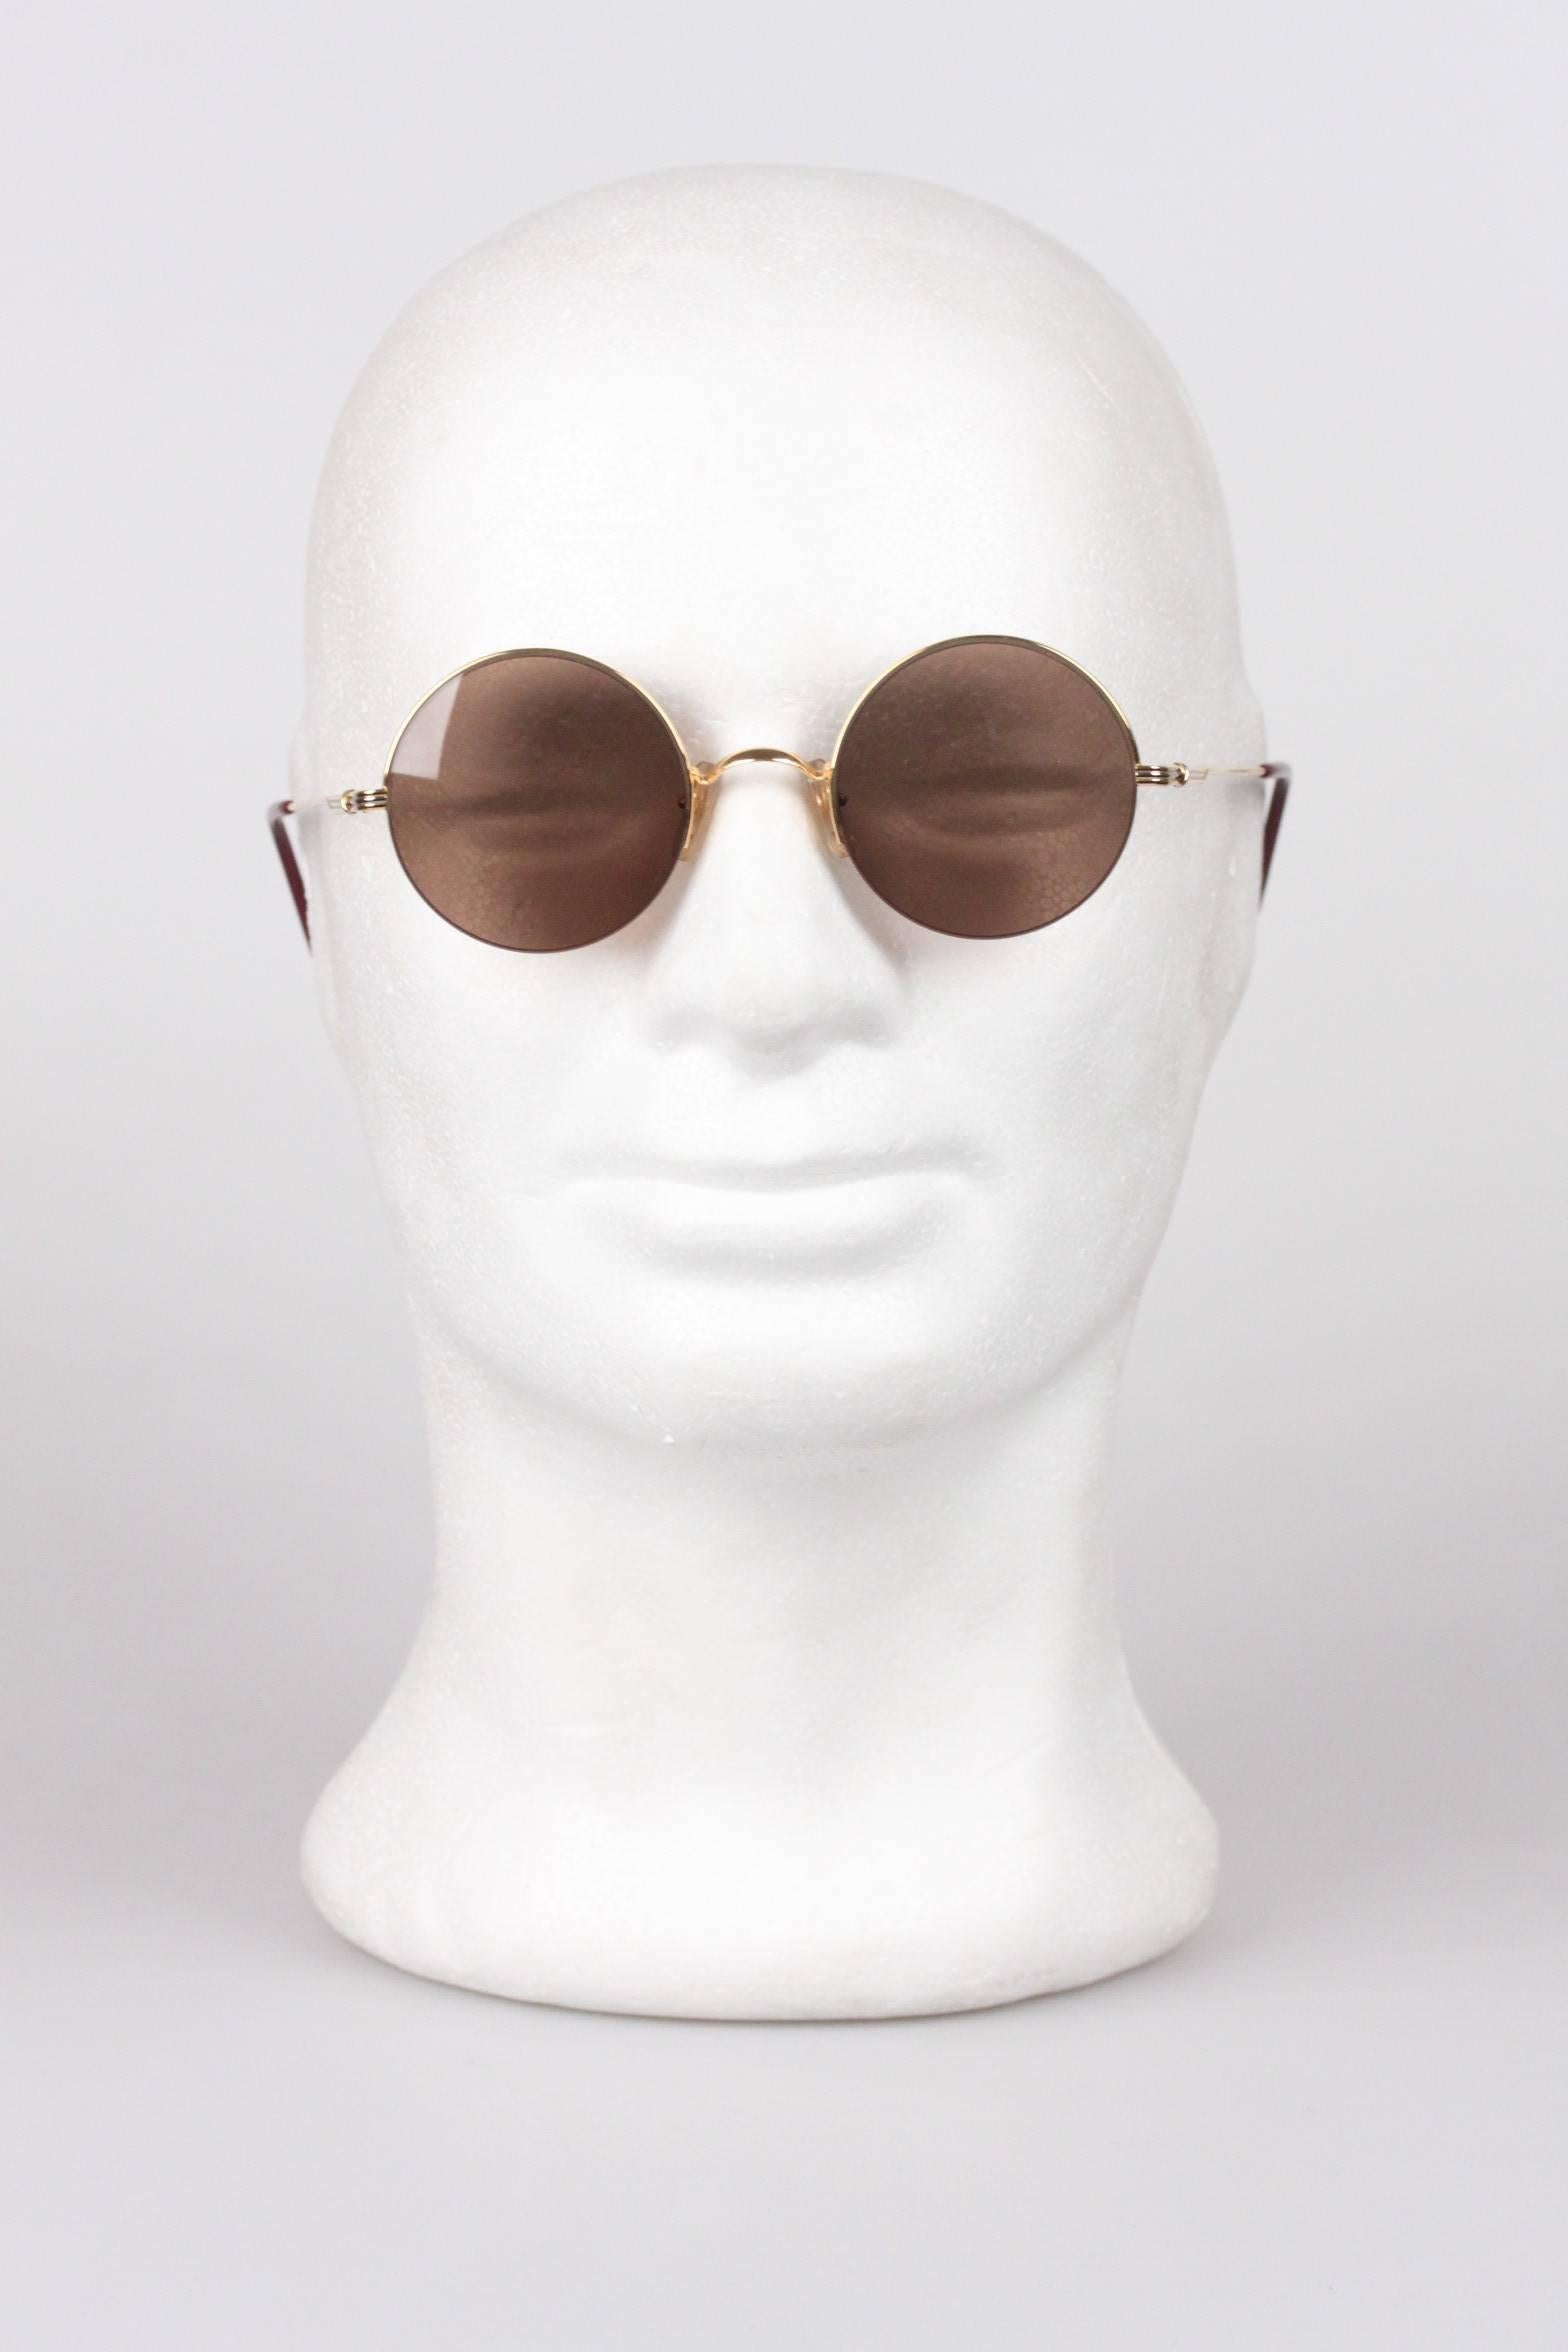 CARTIER Paris VINTAGE RARE Sunglasses MAYFAIR 18k Gold 47mm In Excellent Condition In Rome, Rome